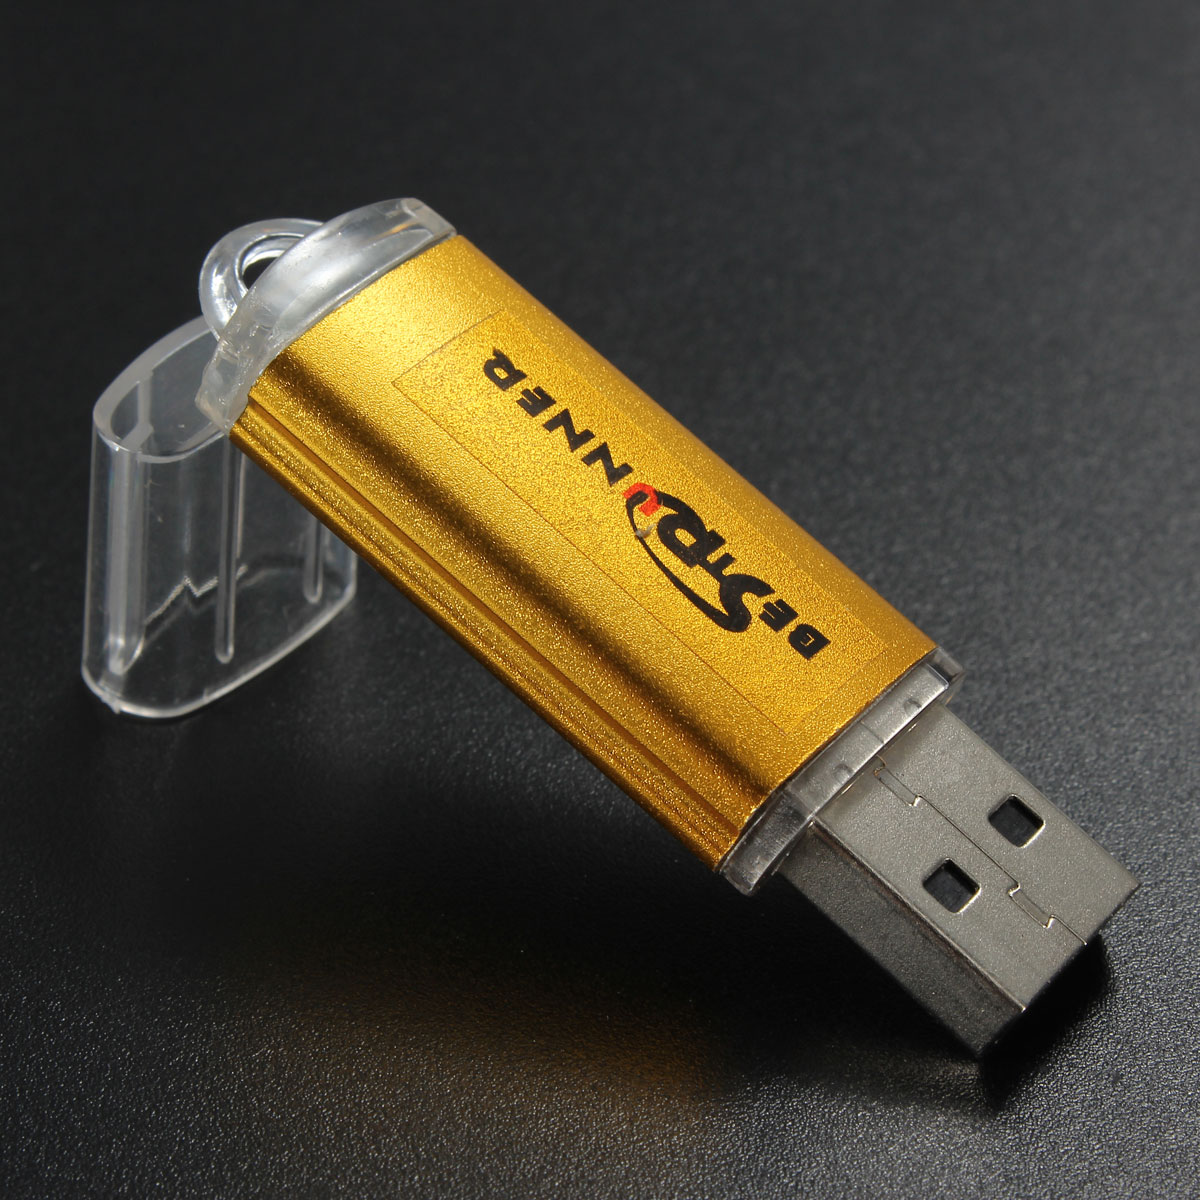 Bestrunner-Multi-Color-Portable-USB-20-1GB960M-Pendrive-USB-Disk-for-Macbook-Laptop-PC-1723018-11